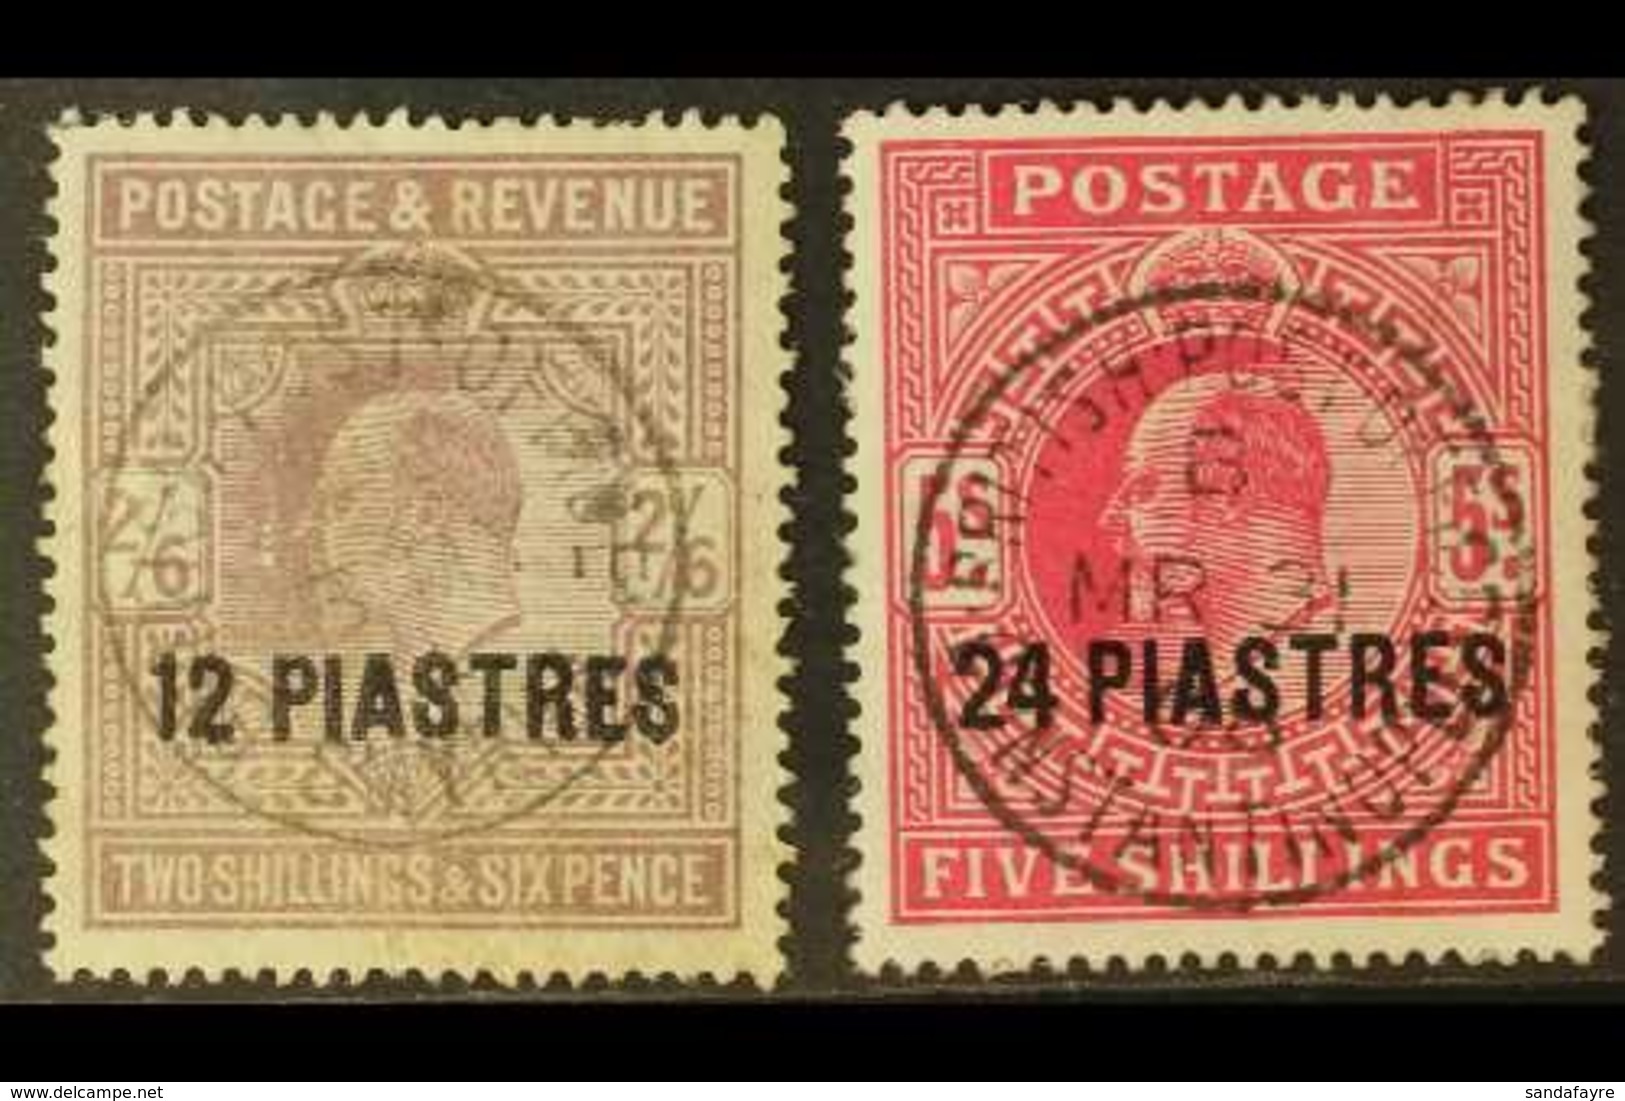 1902-05 12pi On 2s.6d Lilac, And 24pi On 5s Bright Carmine, SG 11/12, Fine Full Smyrna Or Constantinople Cds's. (2 Stamp - Levante Britannico